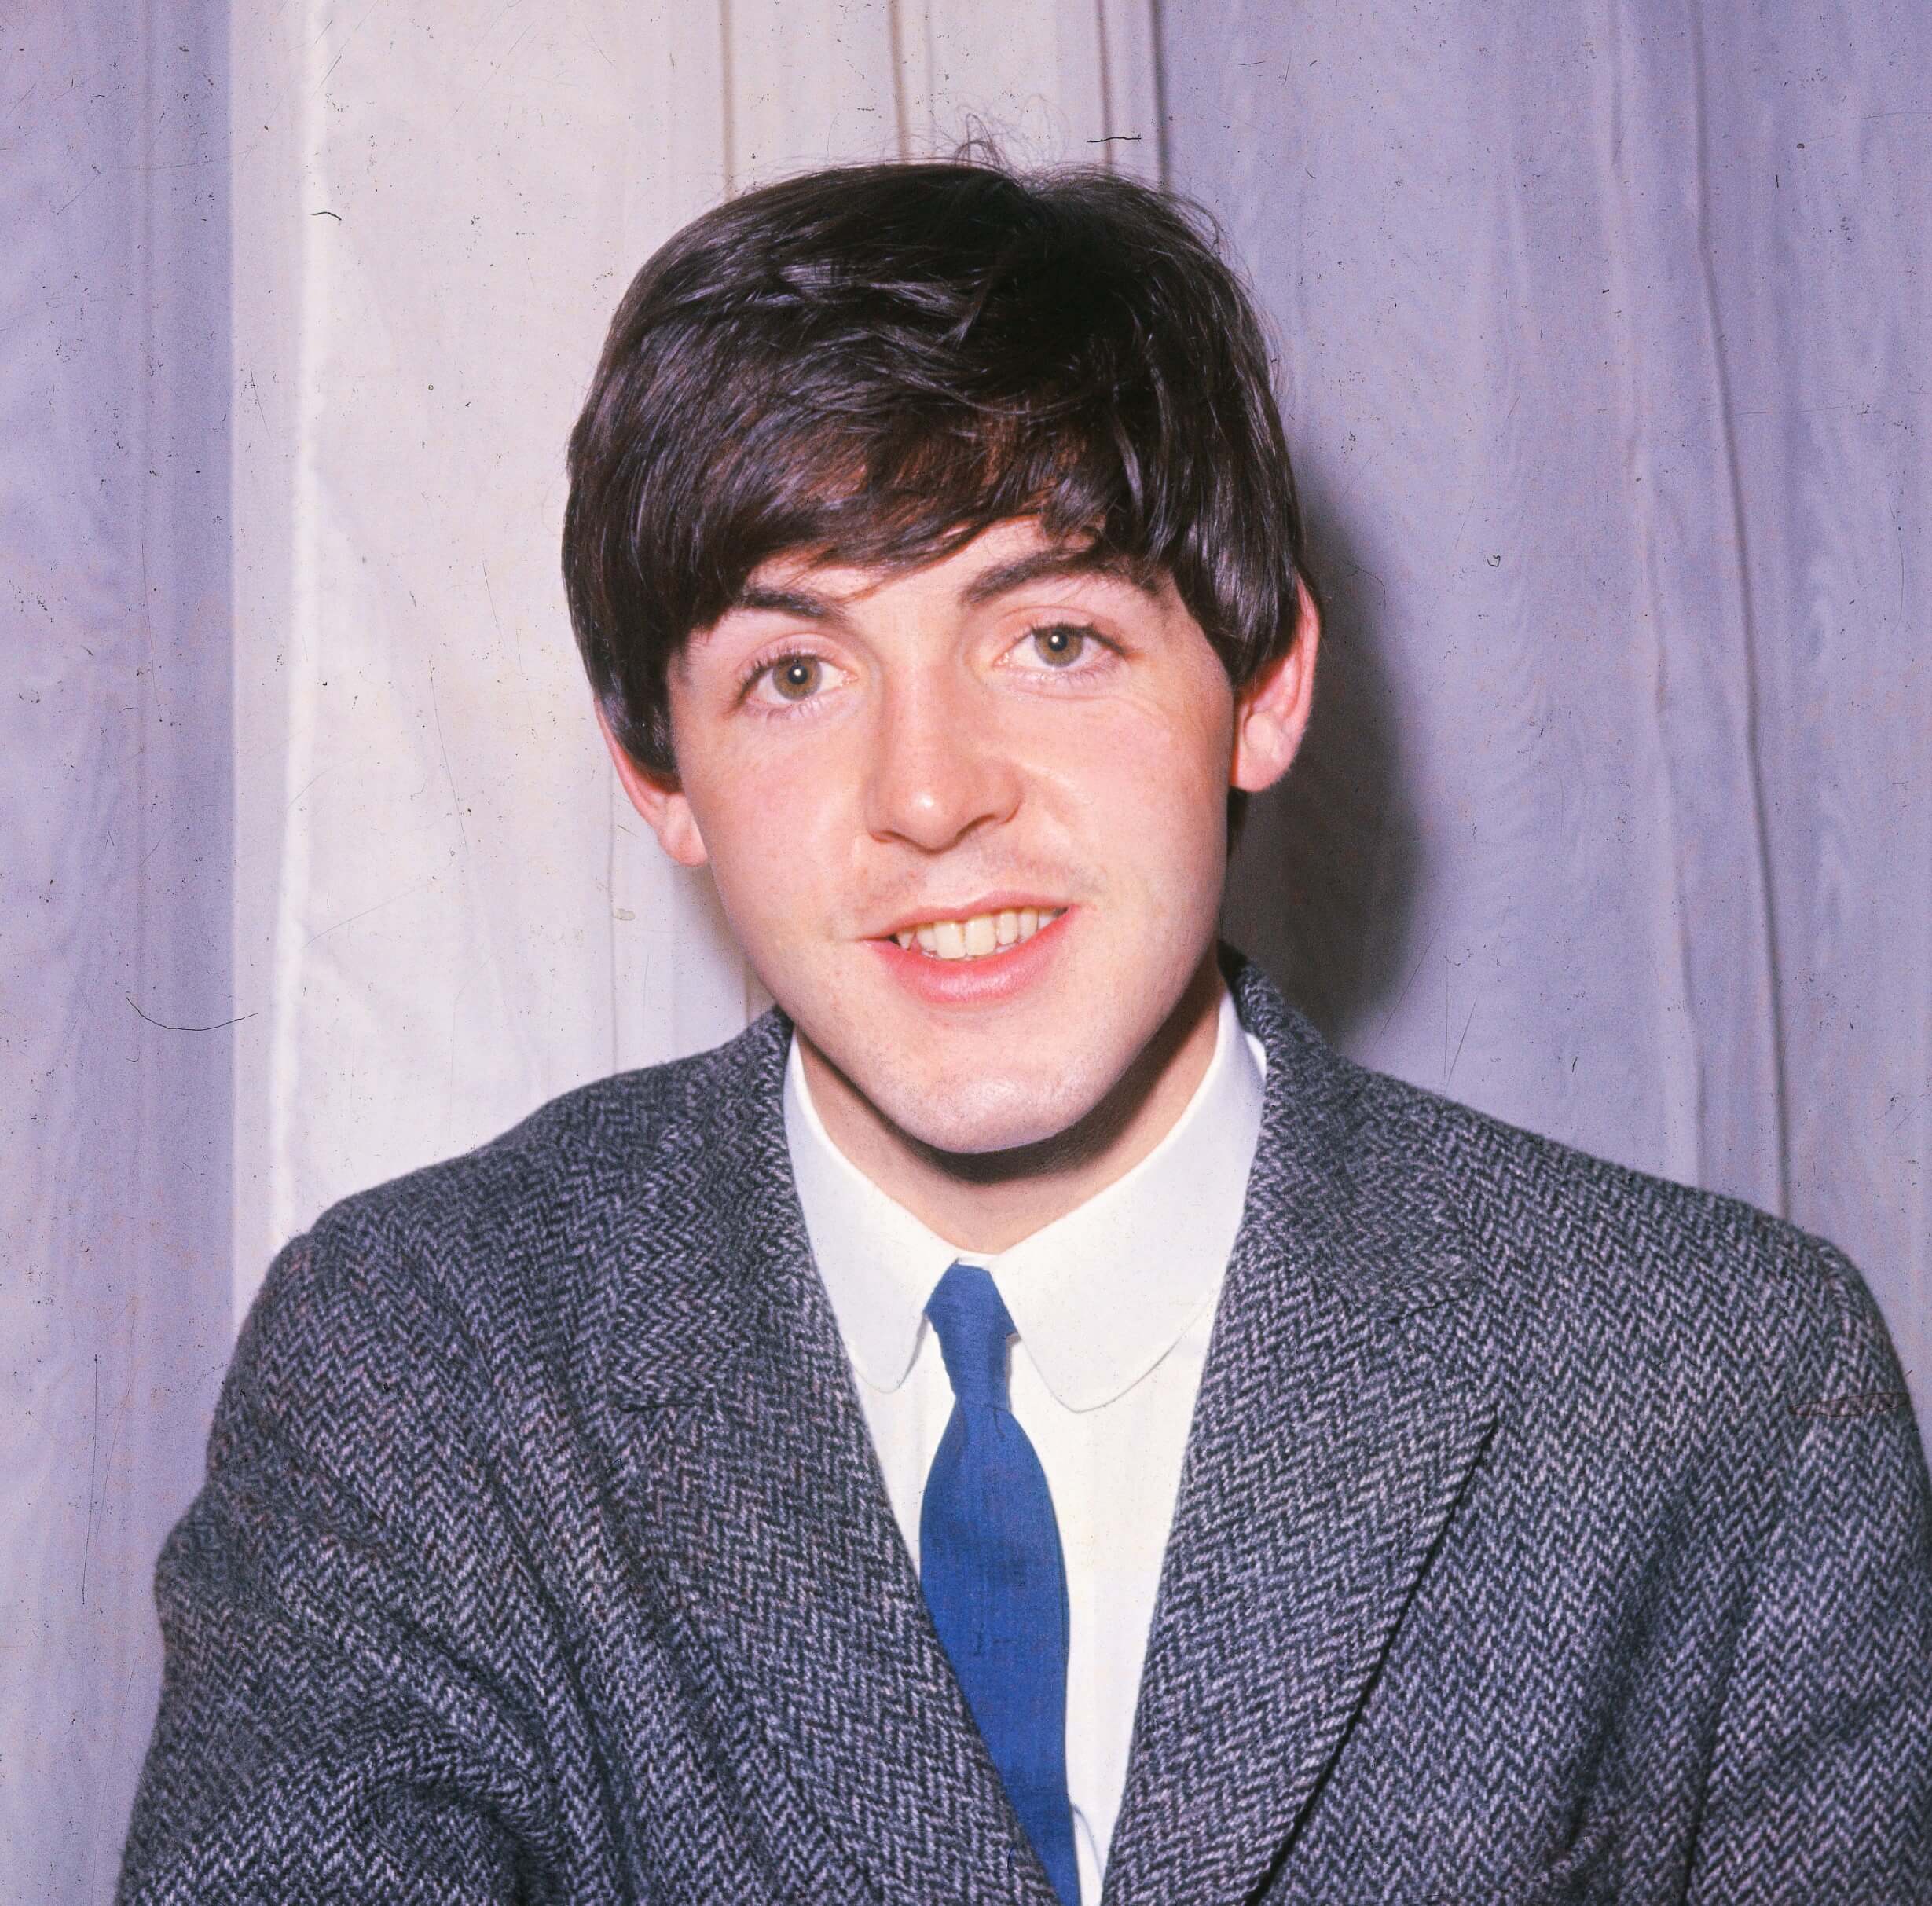 The Beatles' Paul McCartney wearing a tie